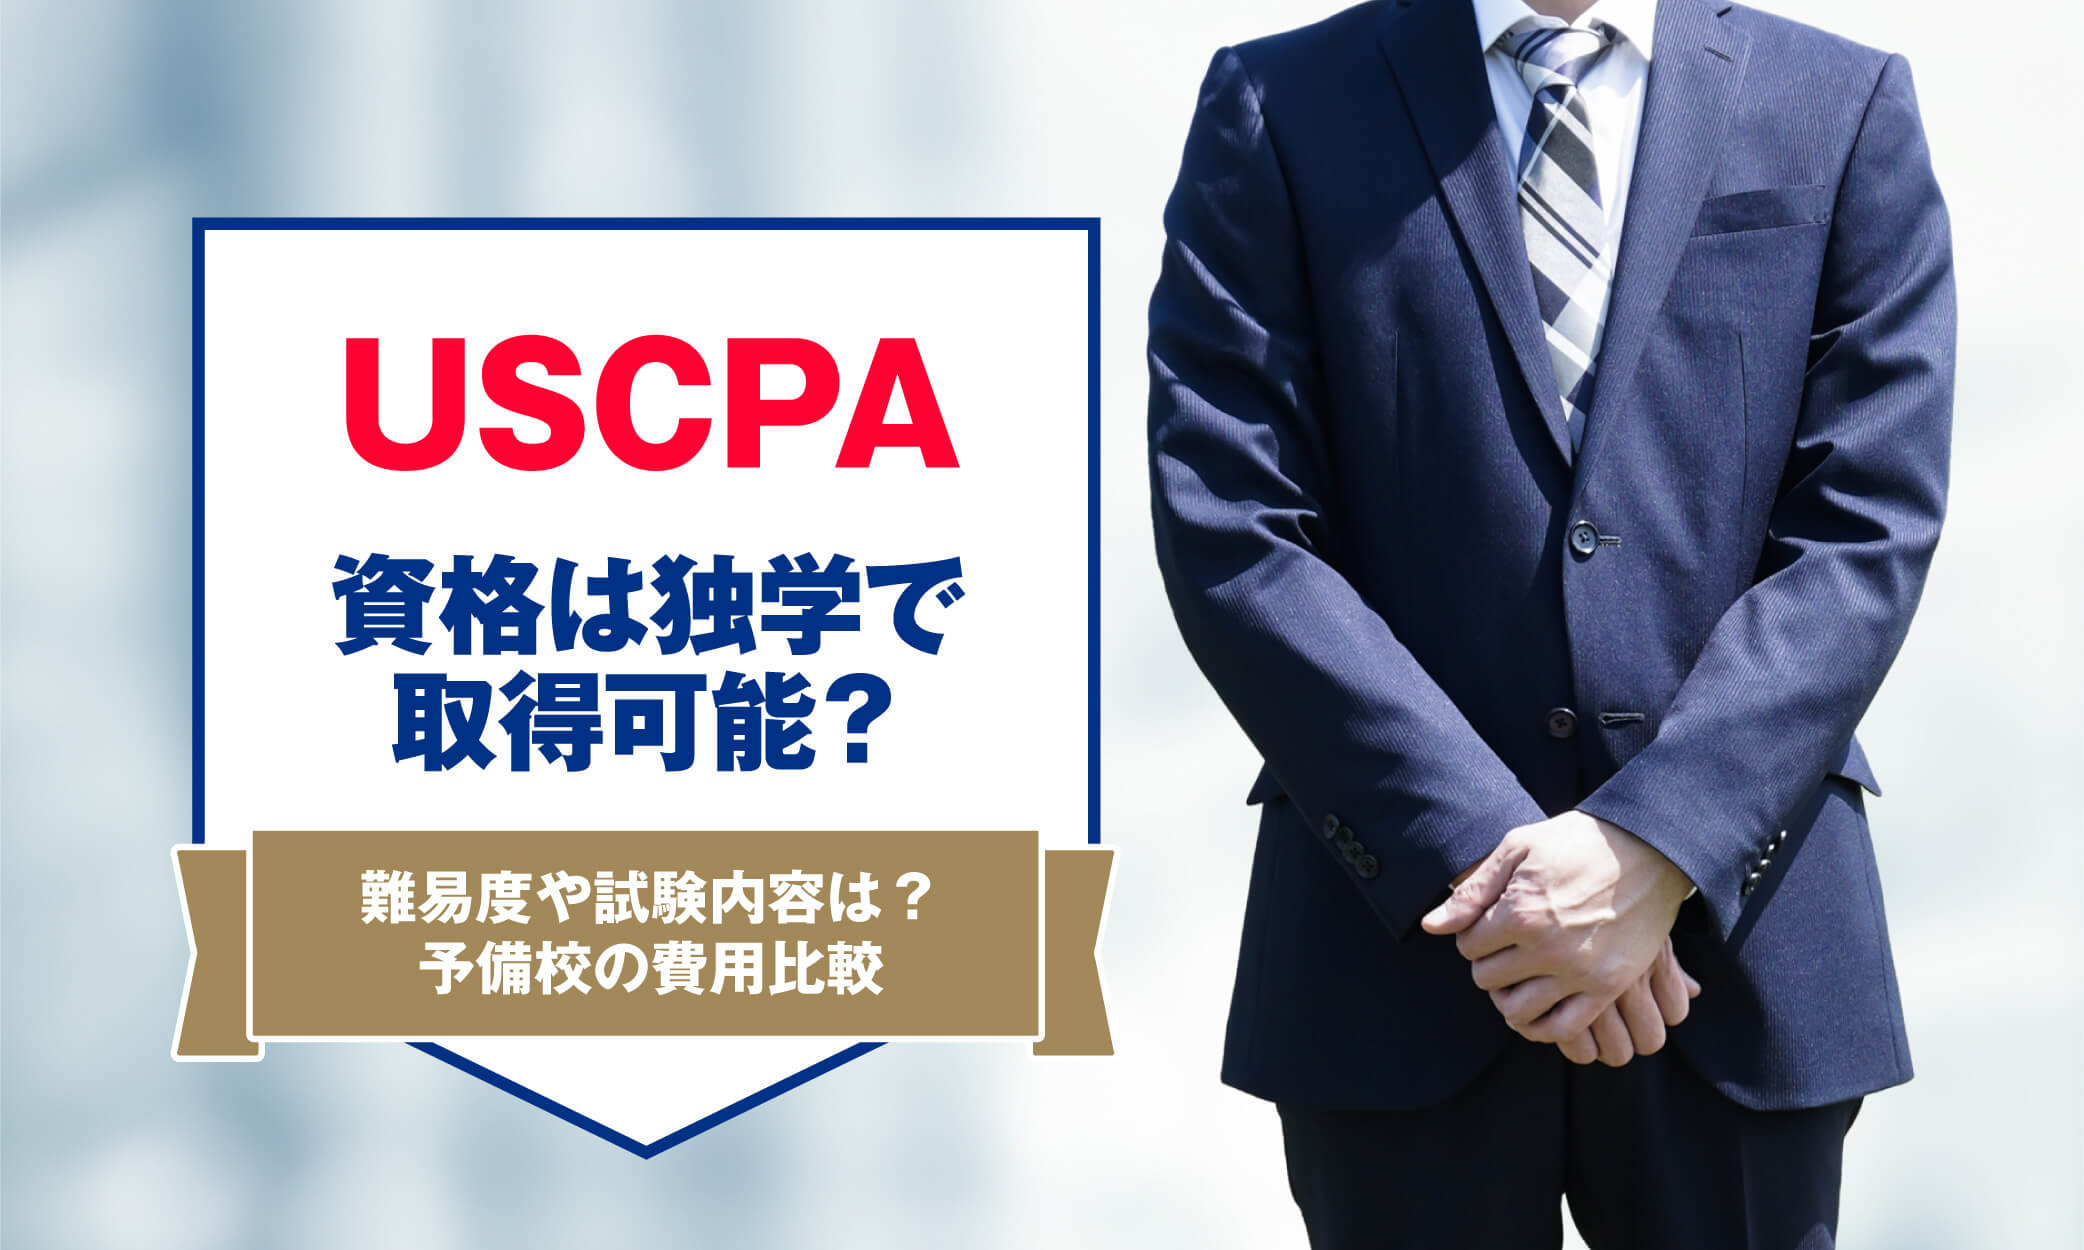 USCPA（米国公認会計士）の資格は独学で取得可能？